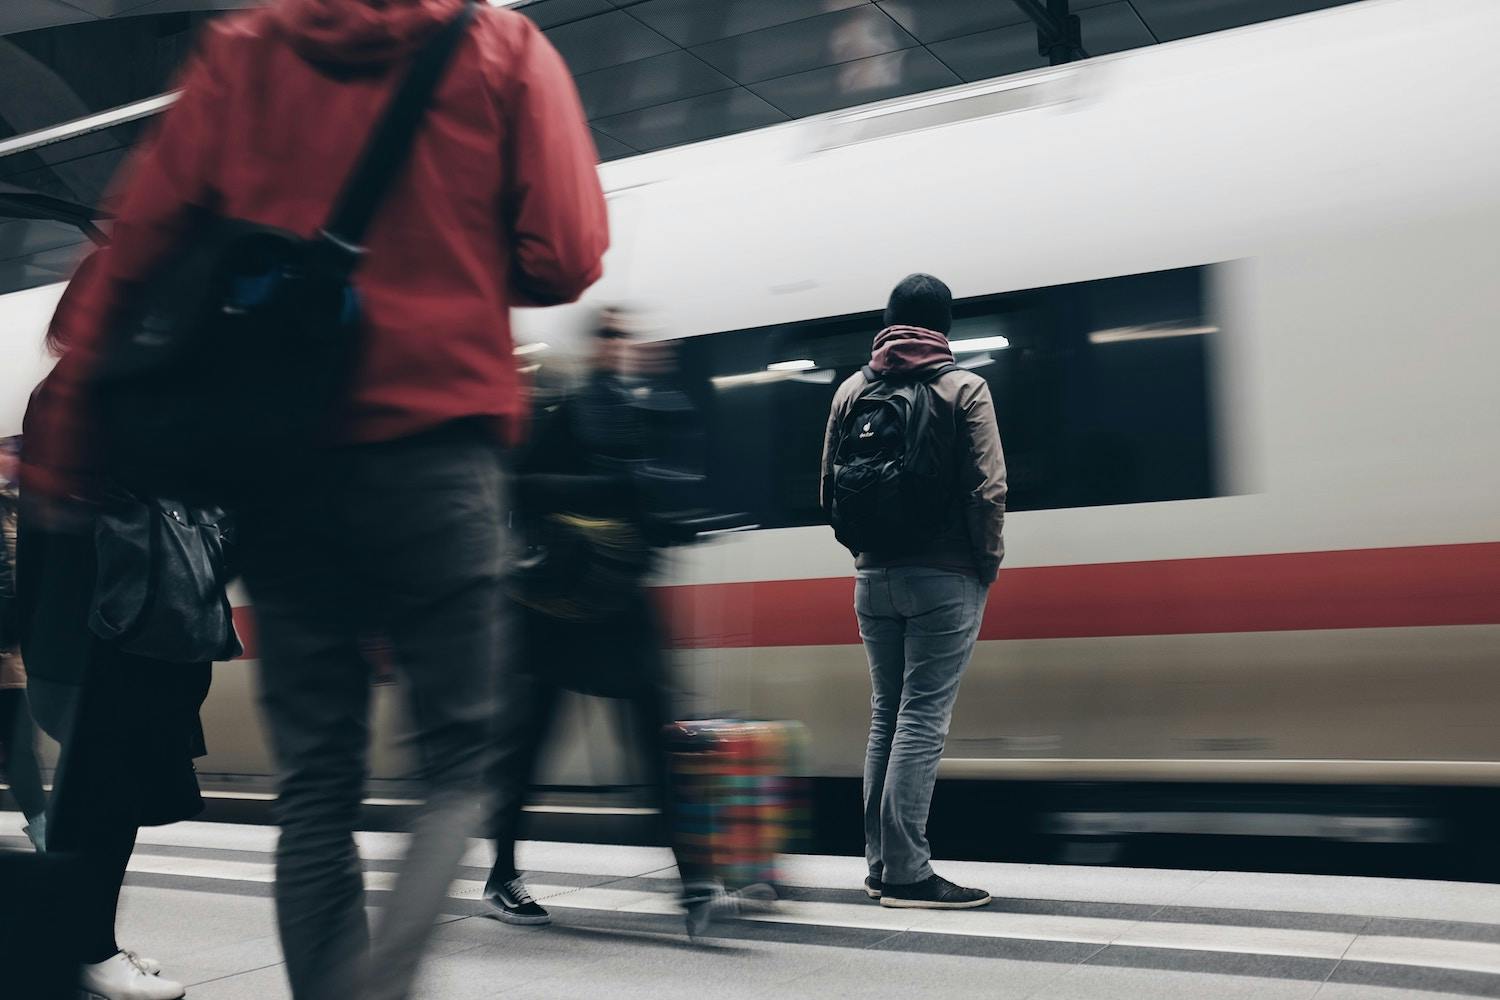 Transport Open Letter: Make Public Transport Autism-Friendly